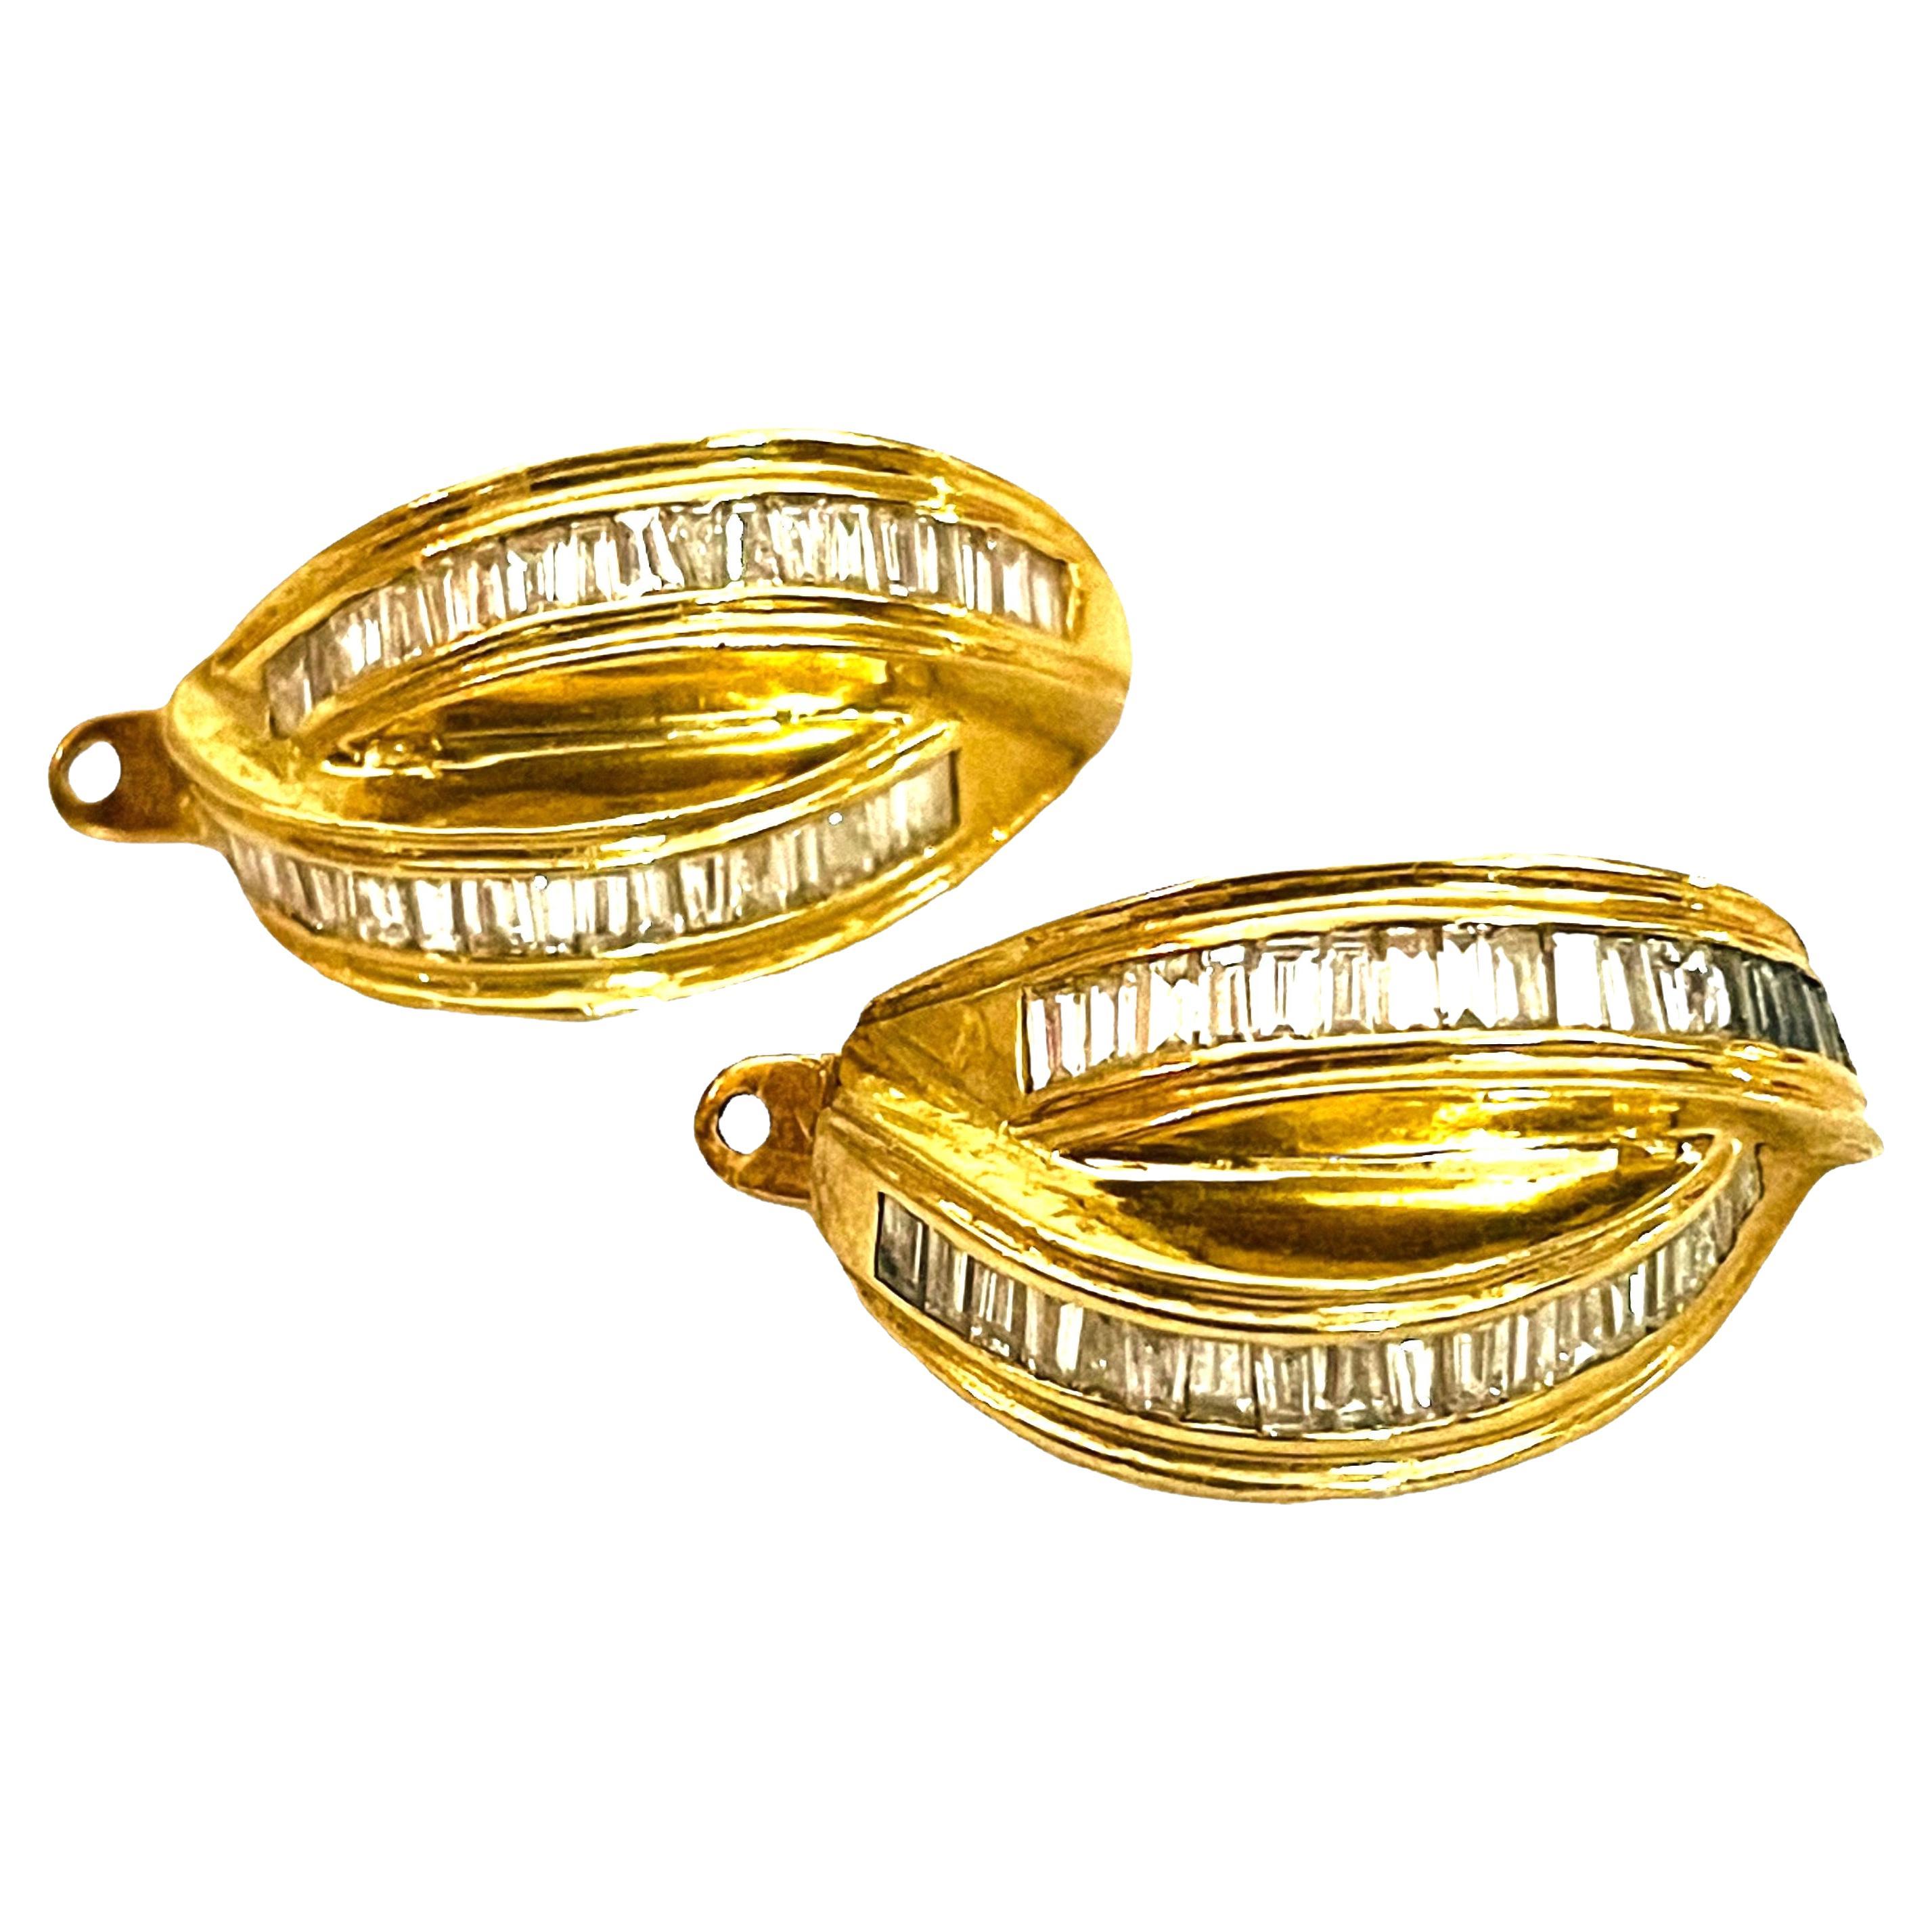 18K Yellow Gold Baguette Channel Set Diamond Earring Jackets with Appraisal